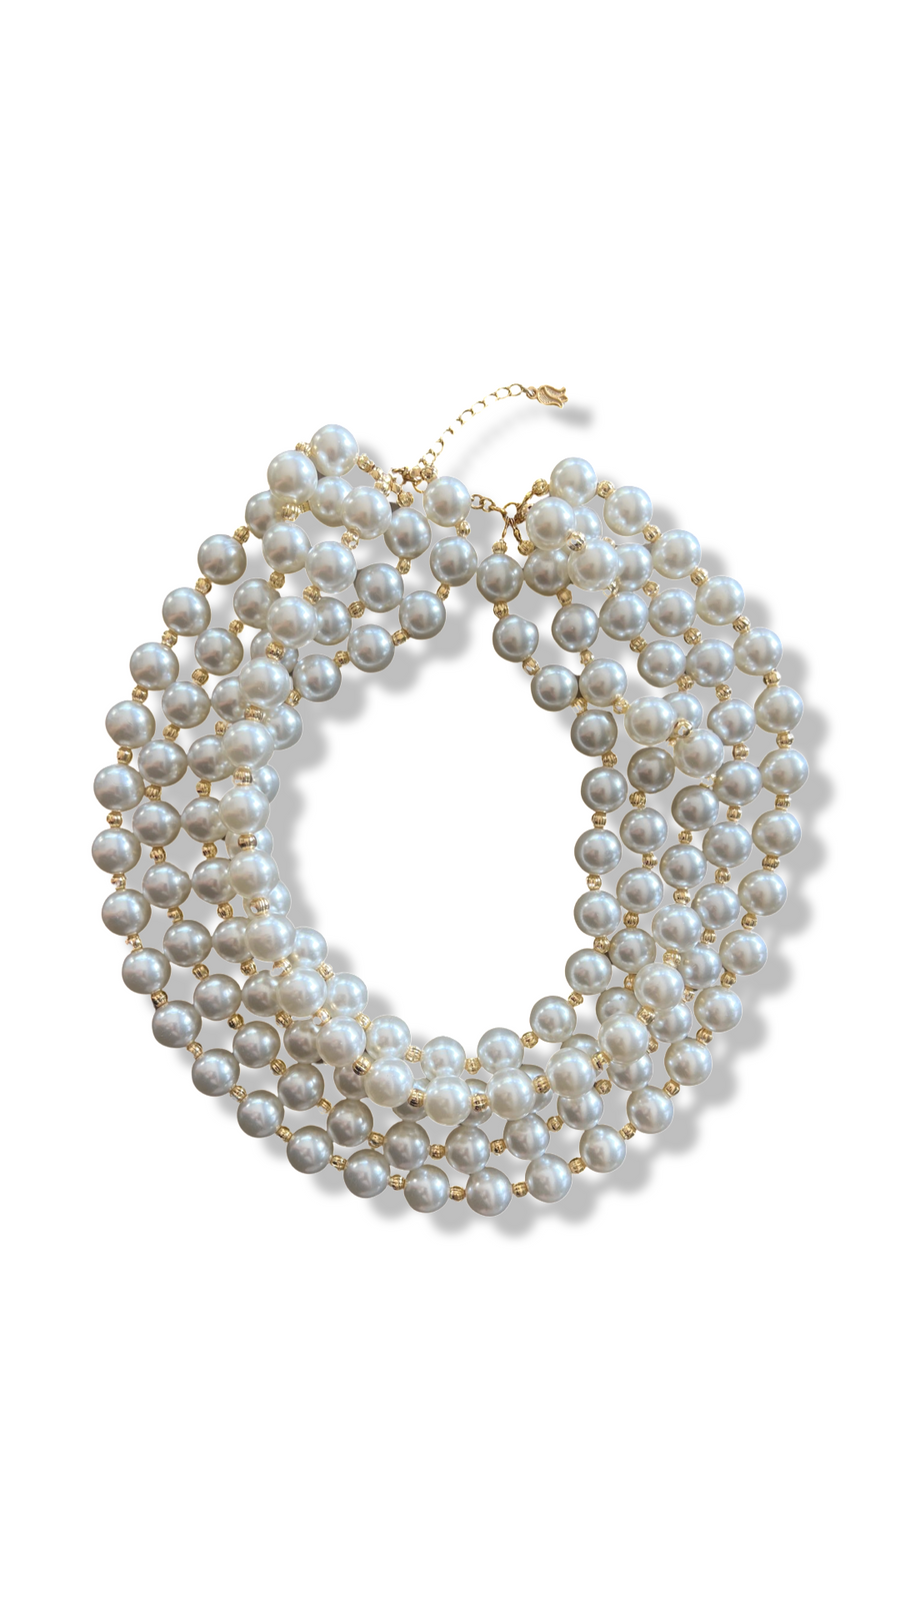 Marissa pearl necklace